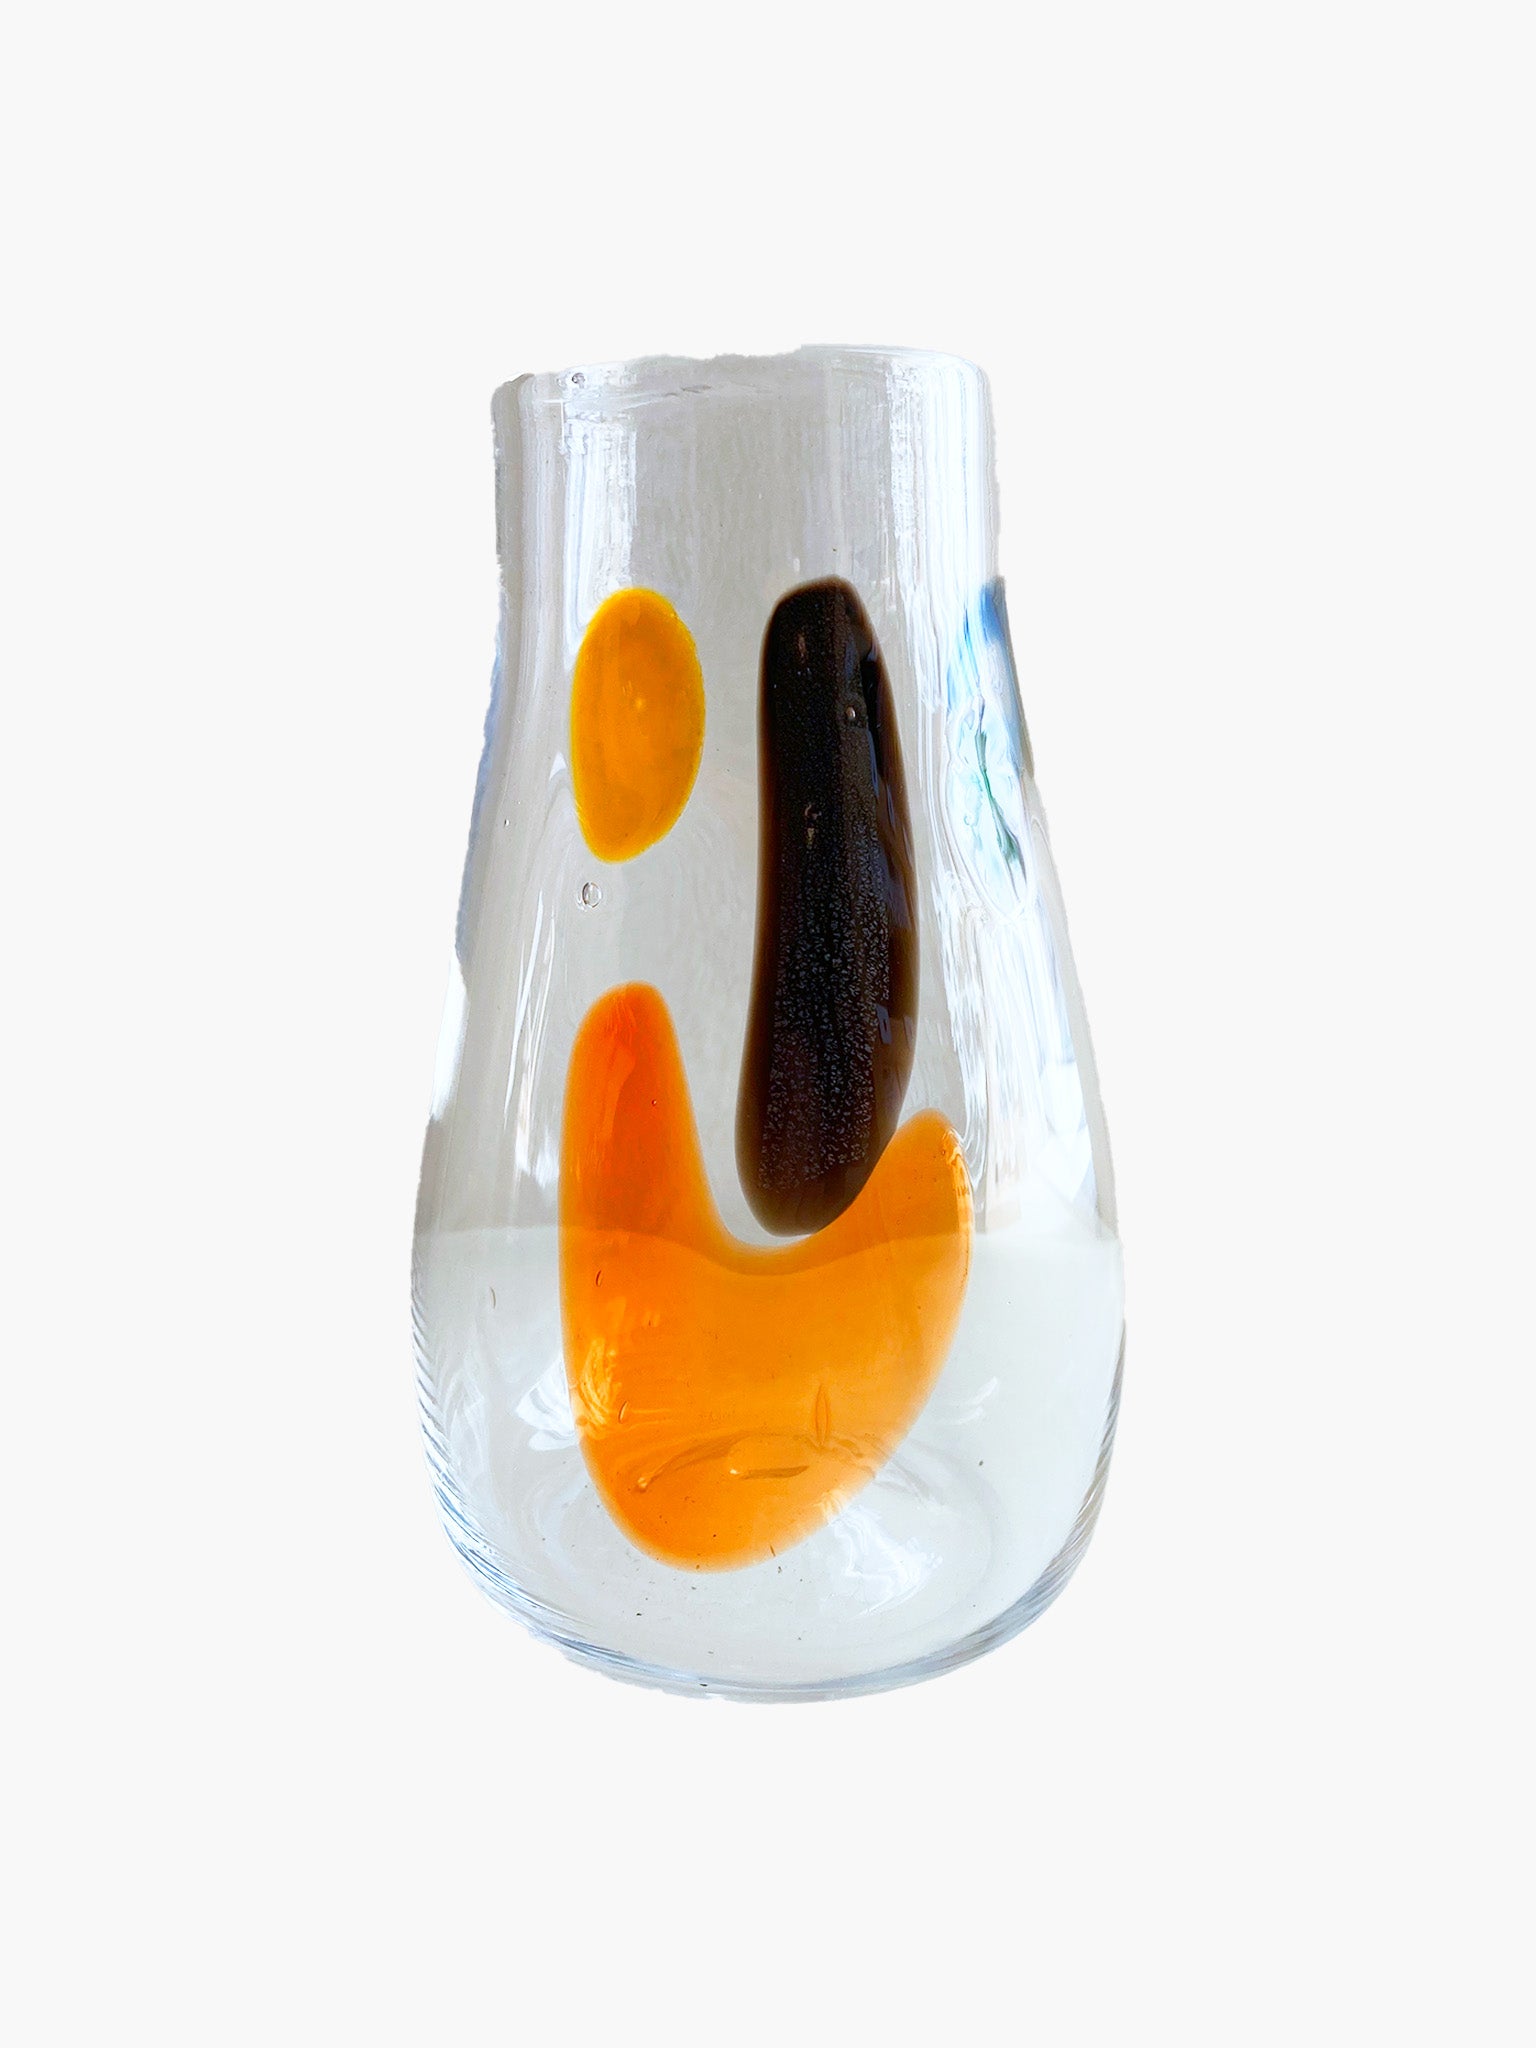 Facevessel - Carafe & Vase (Face 609)